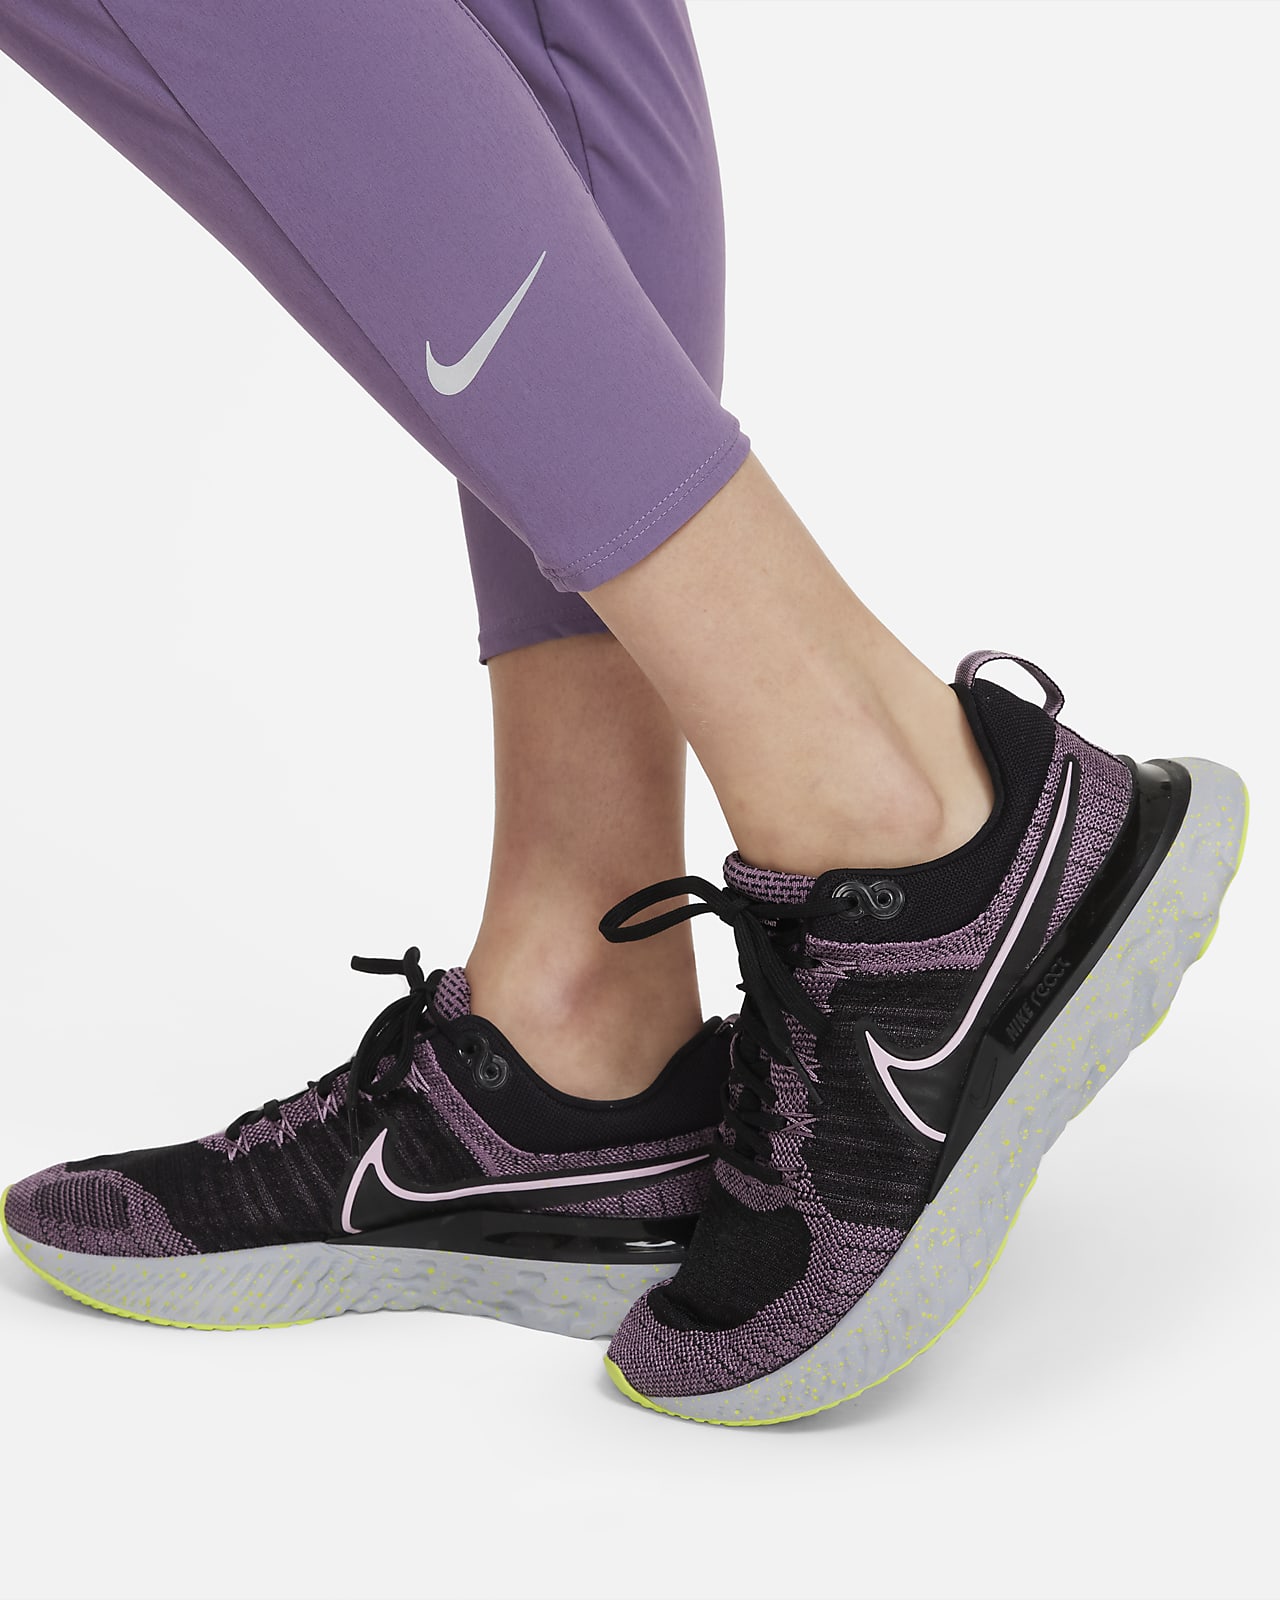 Nike Essential Women's Pants 7/8 Women's Running Walking Trousers